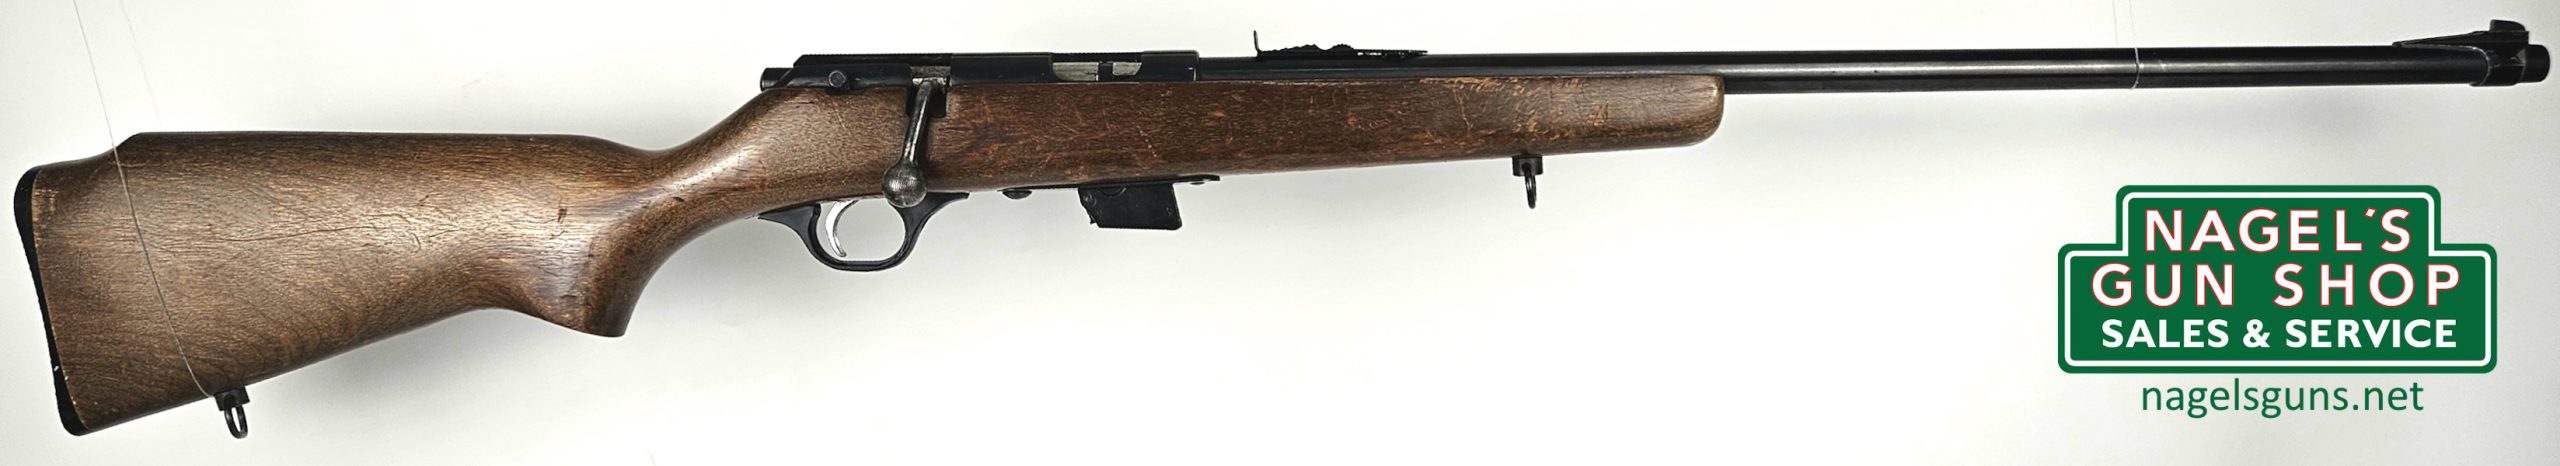 Marlin 25 22LR Rifle